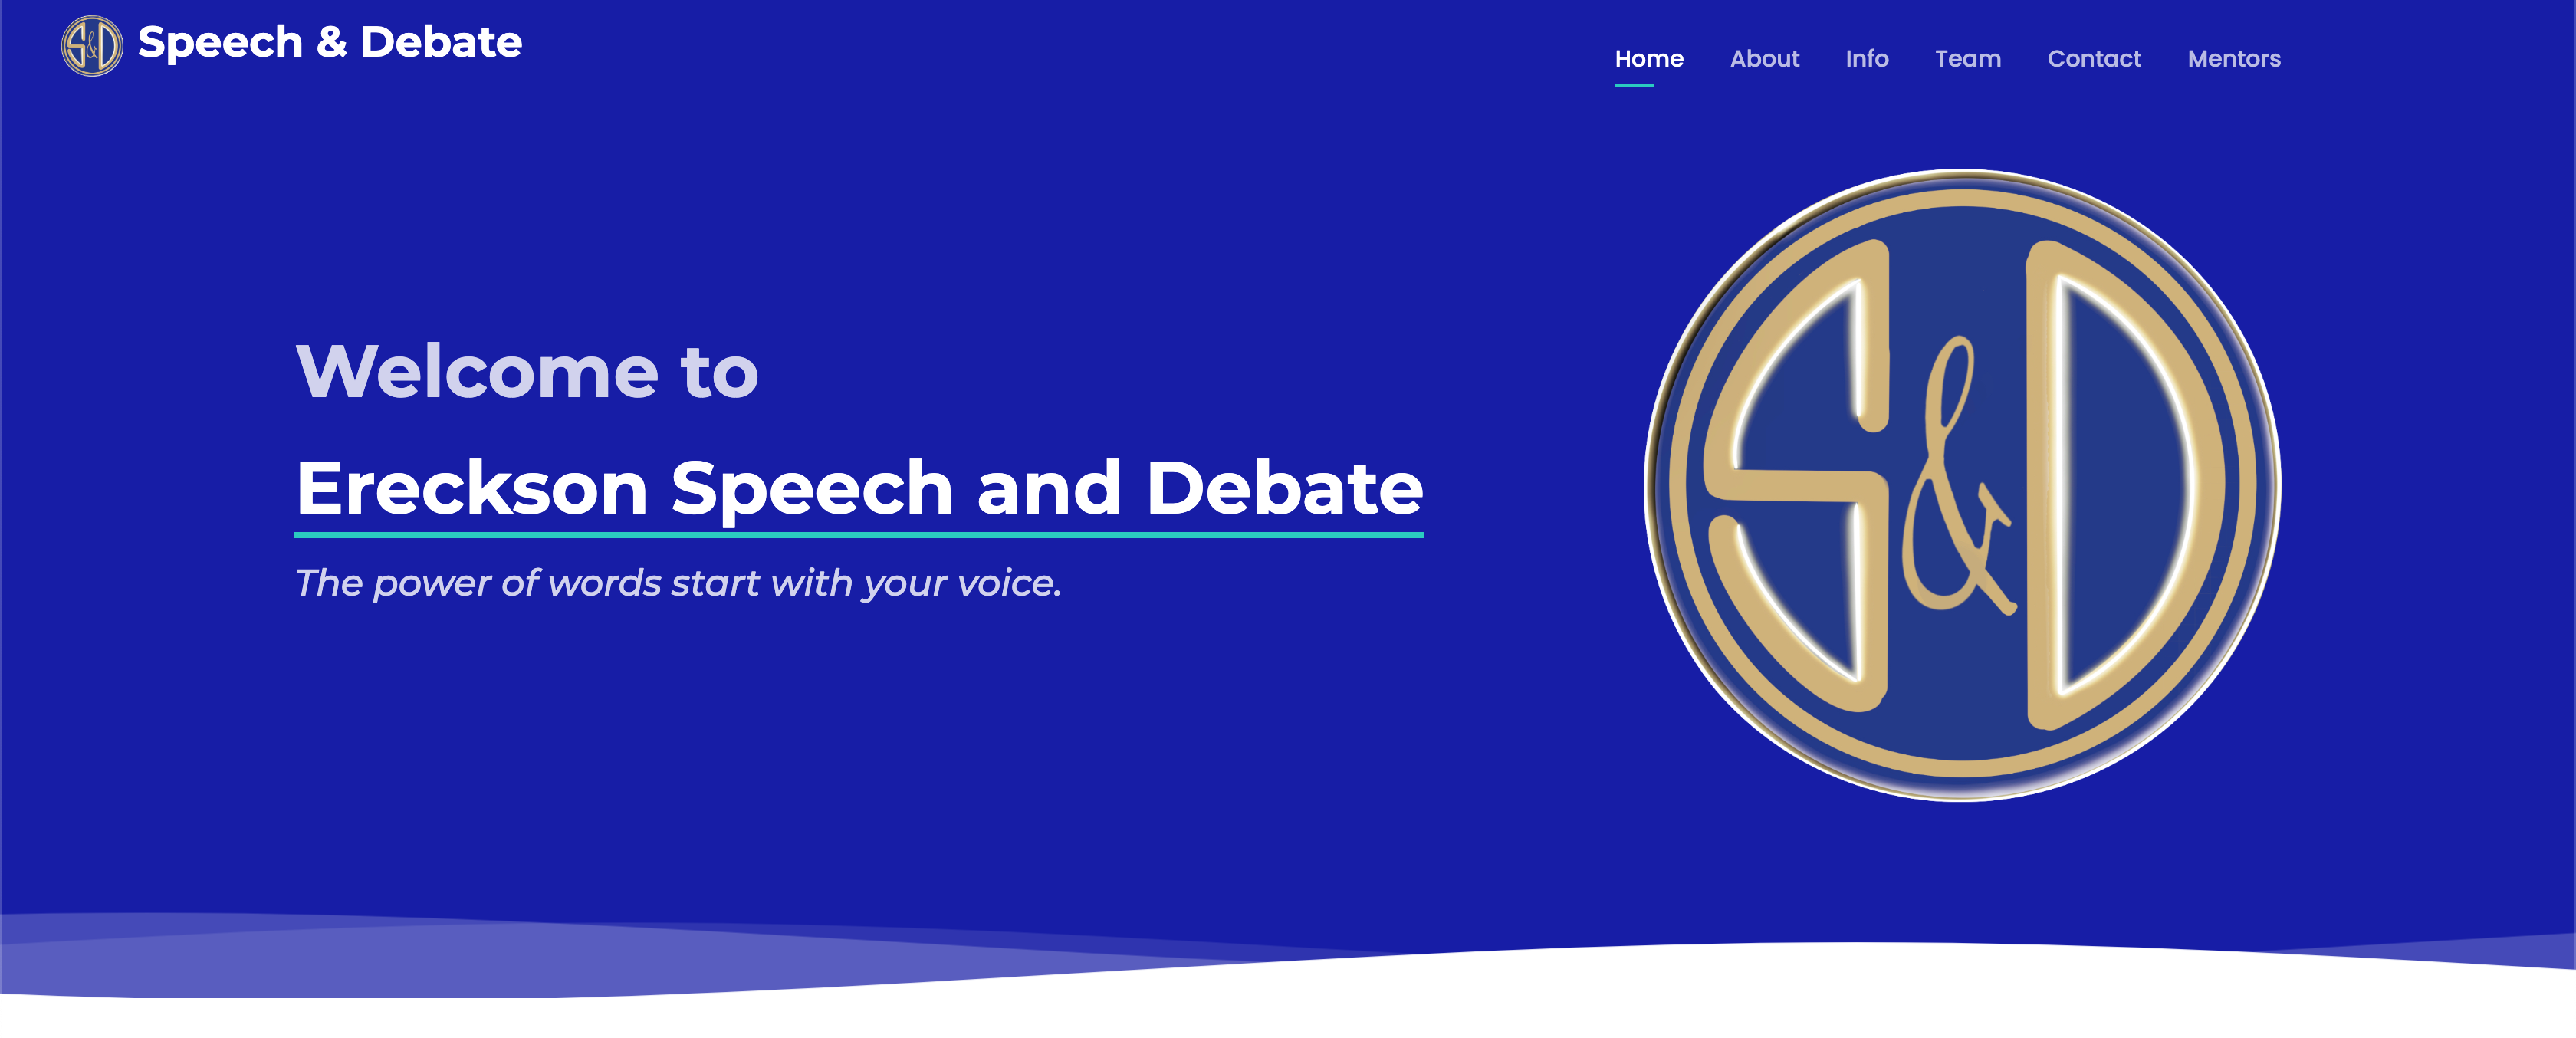 Speech and Debate website UI